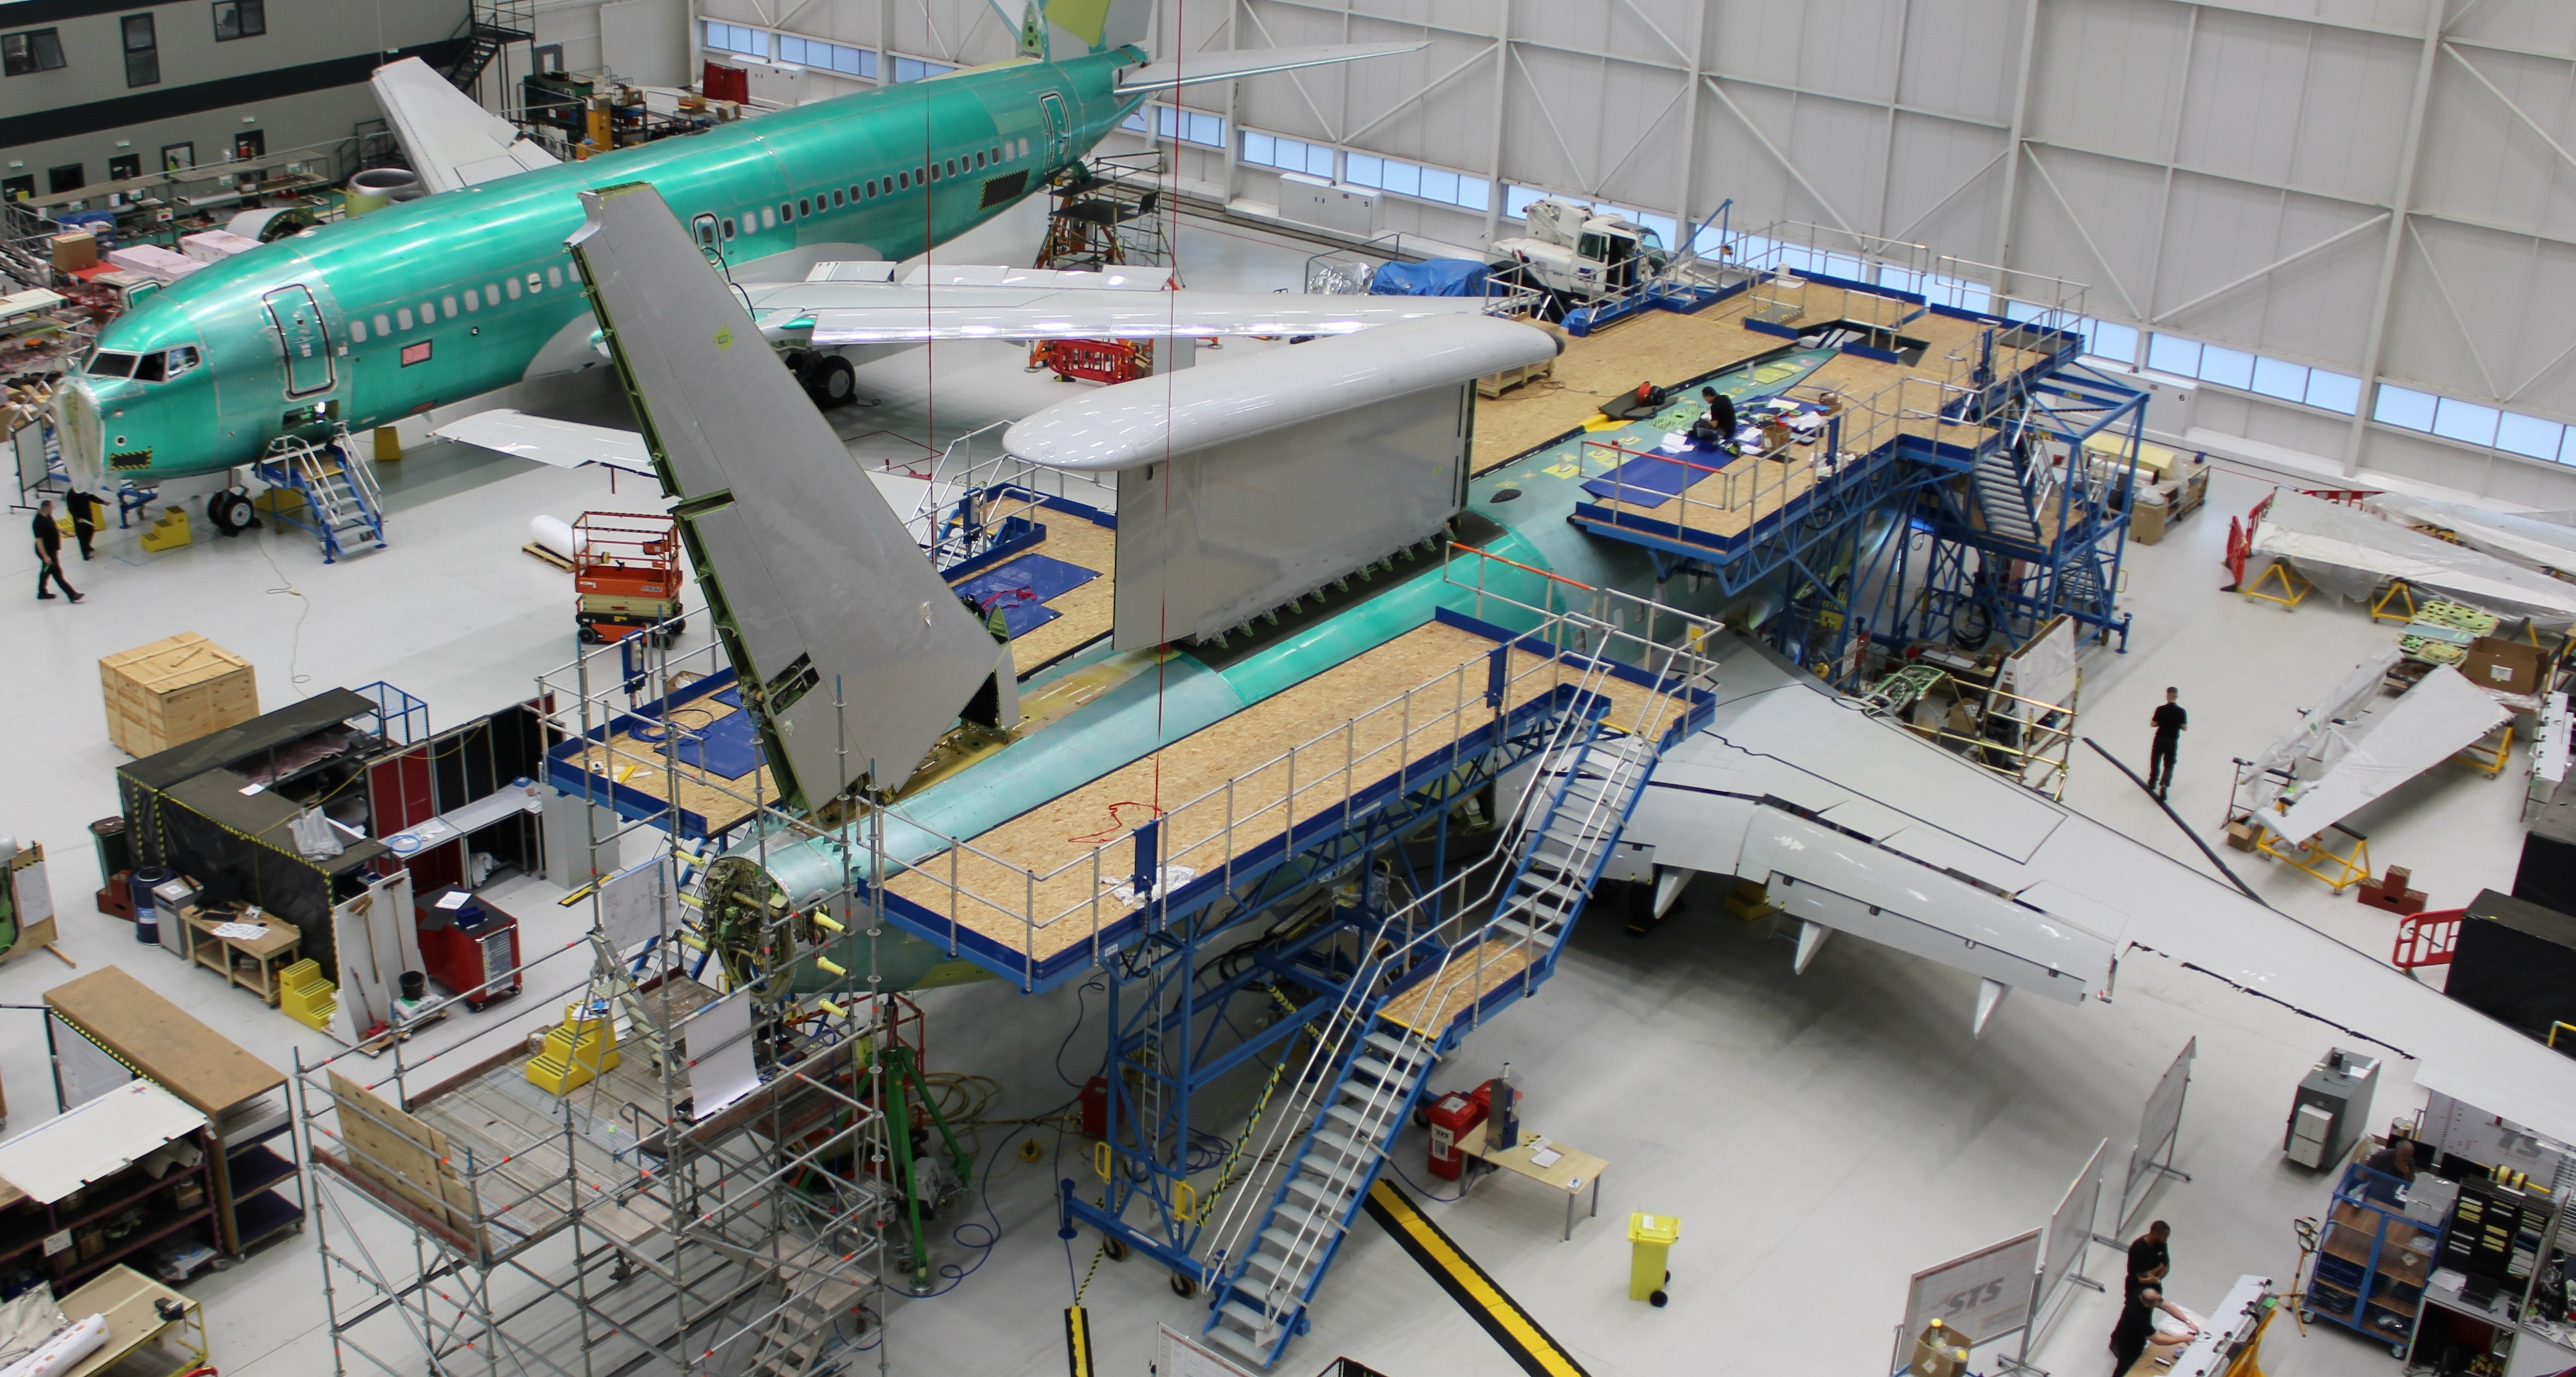 Image shows aircraft parts being assembled inside hangar.